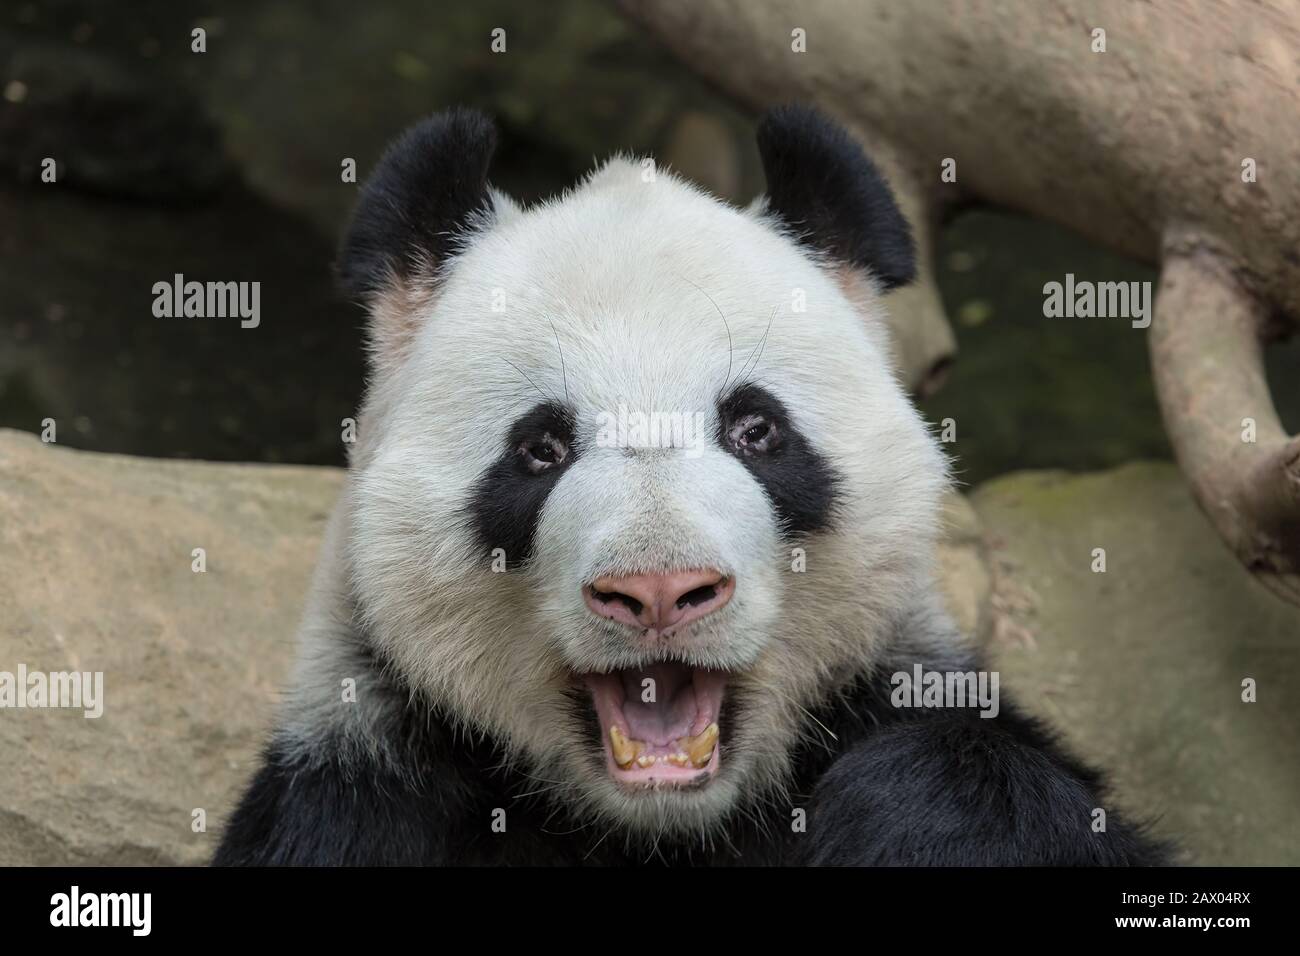 Giant Panda Bear Mouth Open Closeup Portrait Stock Photo